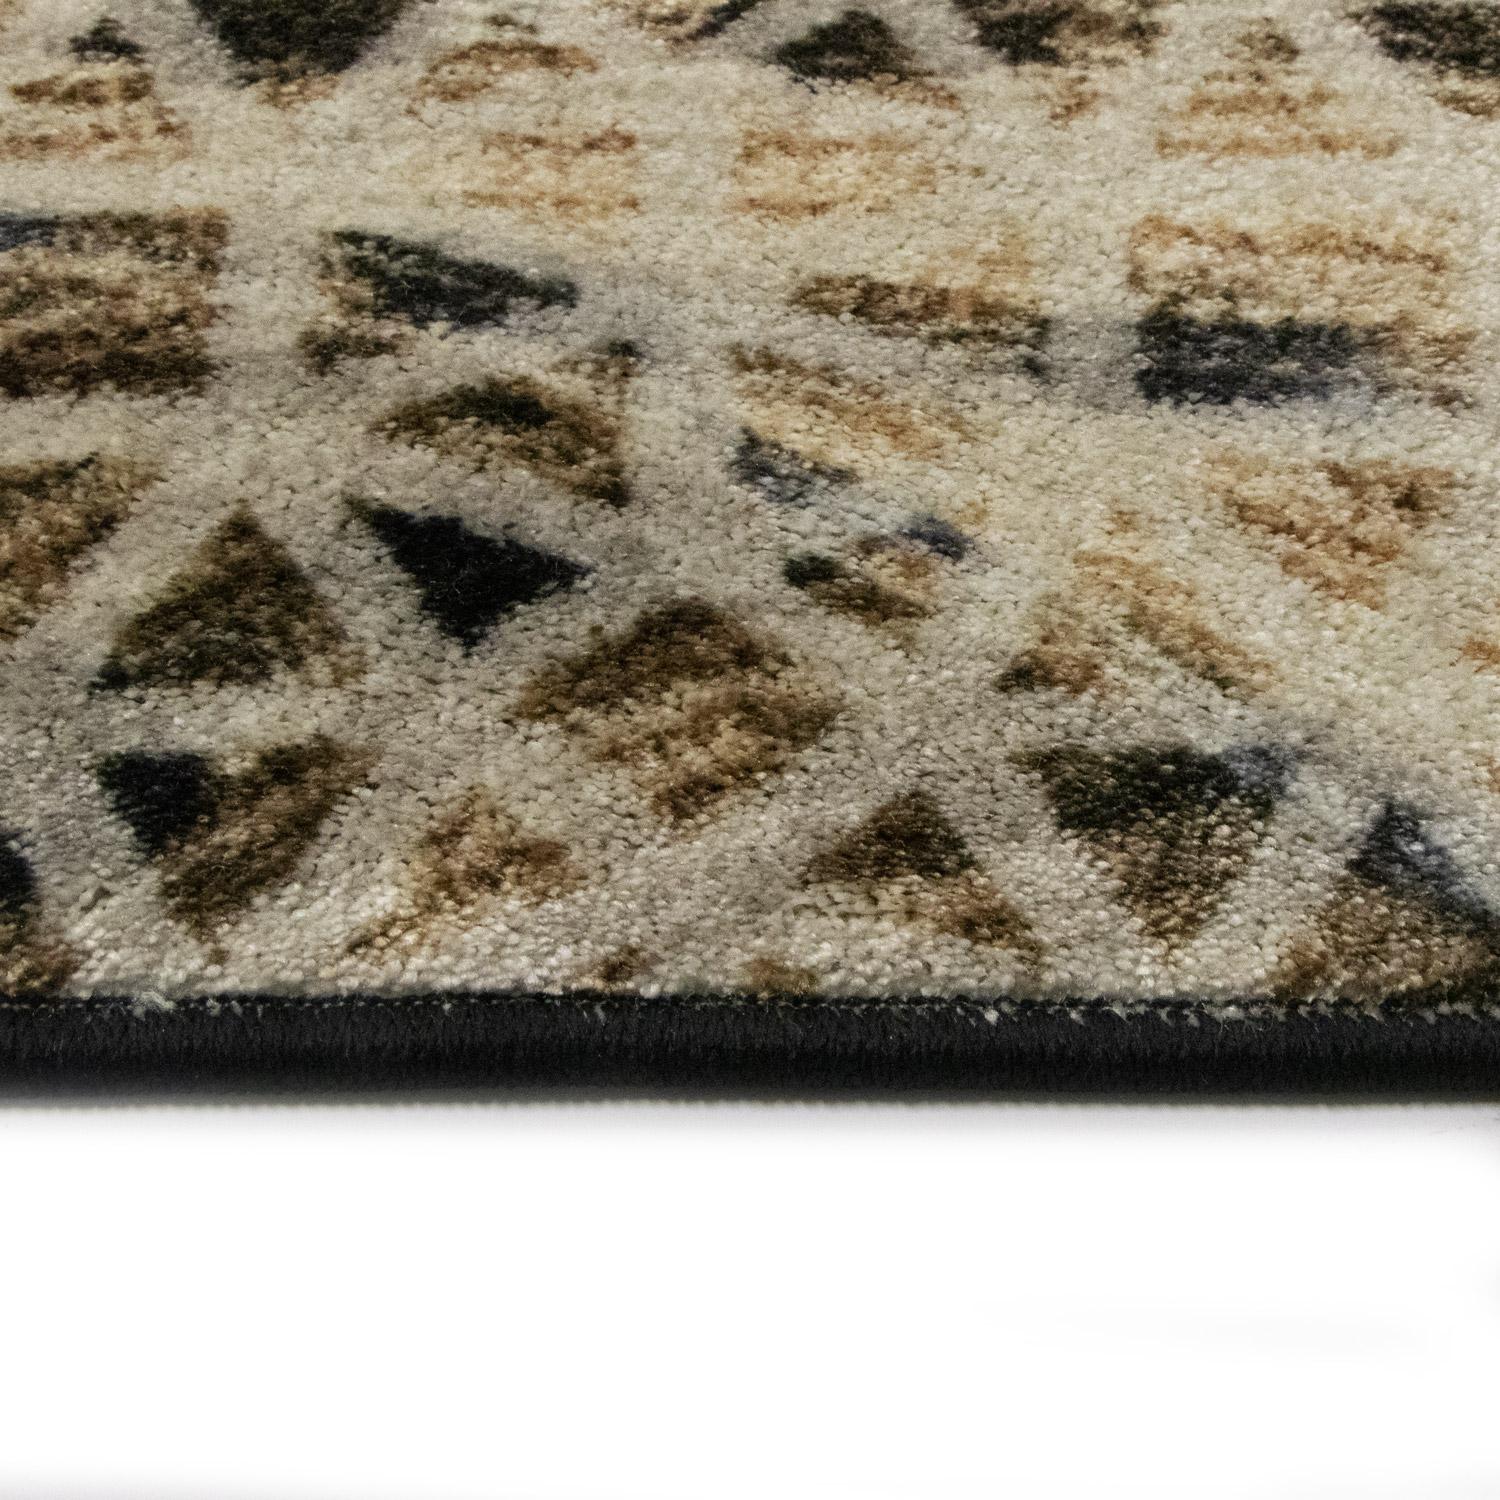 organic shape rug